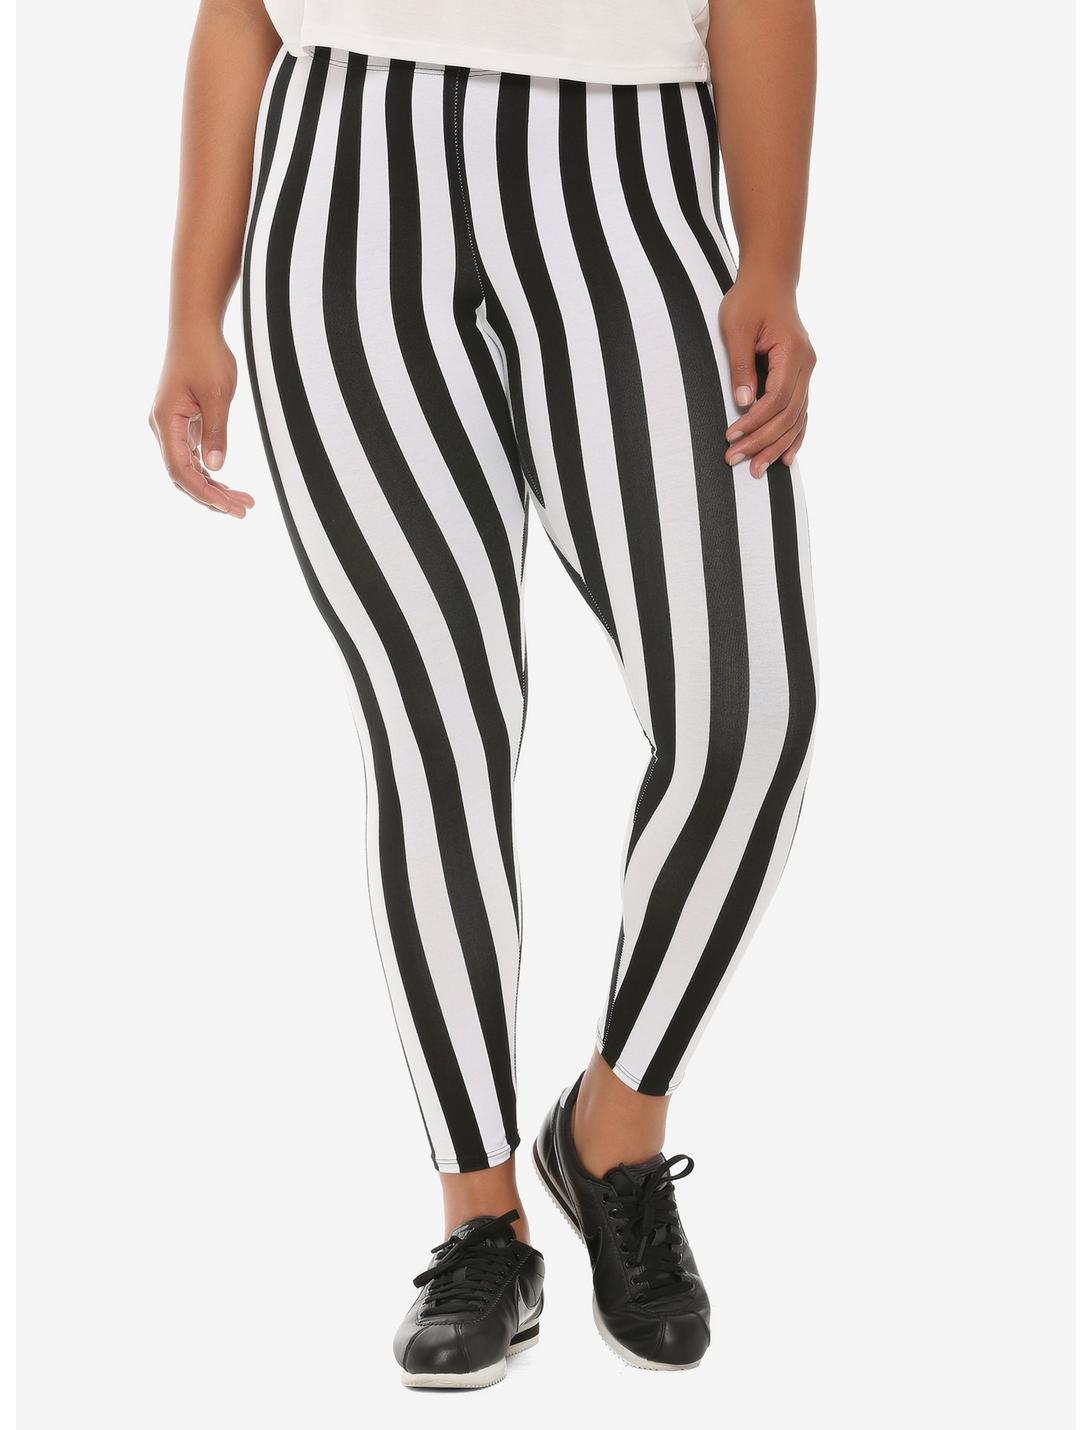 Black & White Vertical Striped Leggings Plus Size, BLACK  WHITE, hi-res